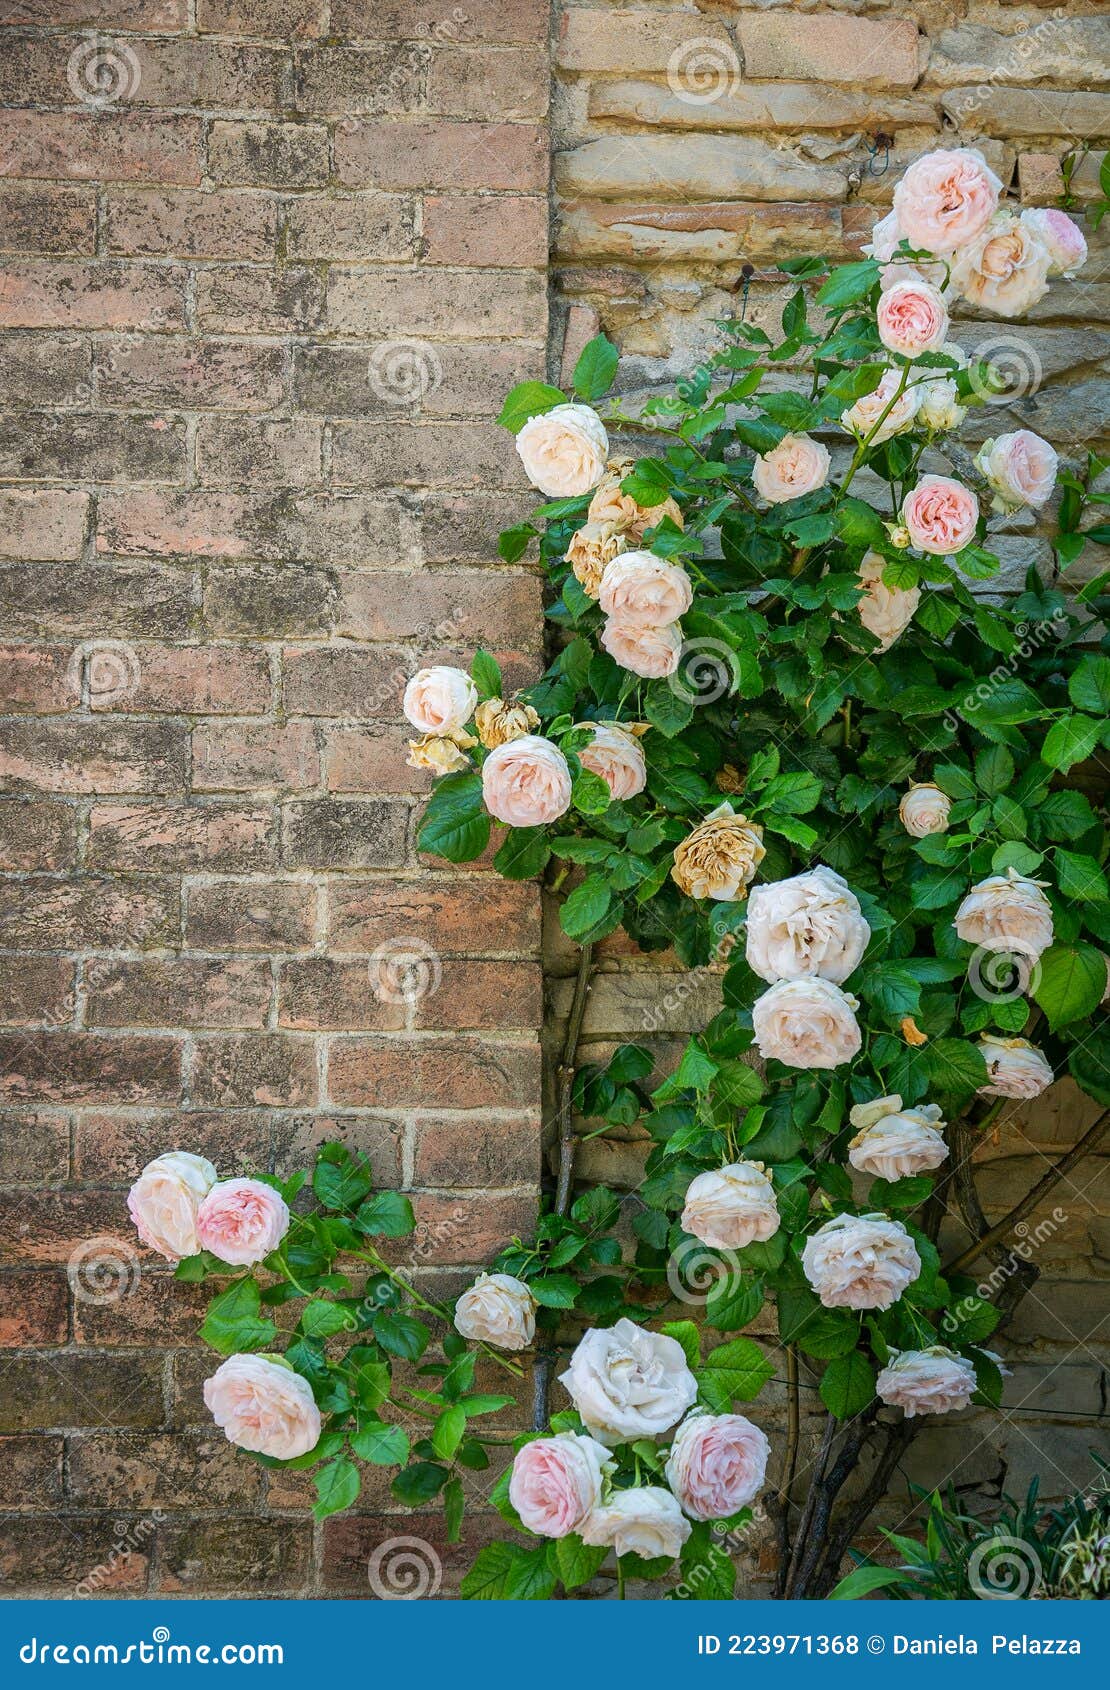 noisette rose bush near an ancient wall